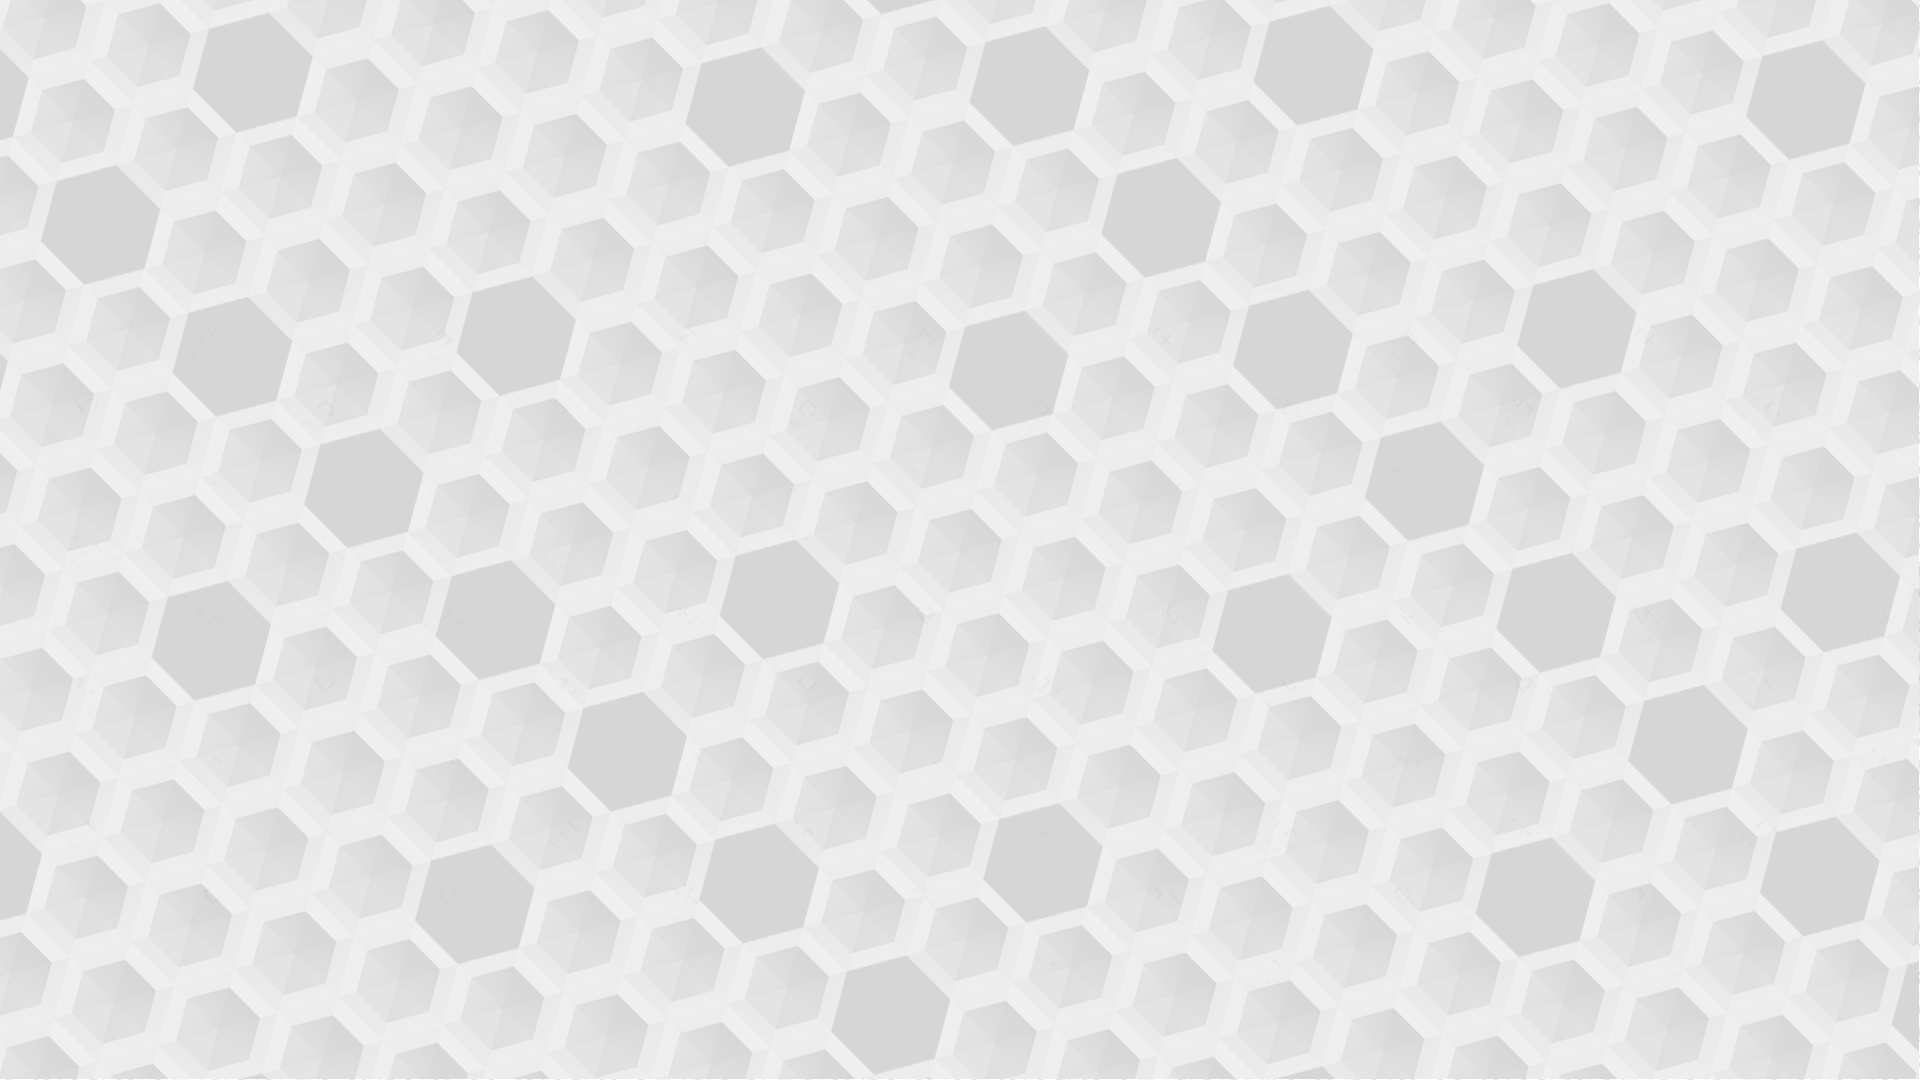 Hive Honeycombs Hexagon Bright White Simple 1920x1080